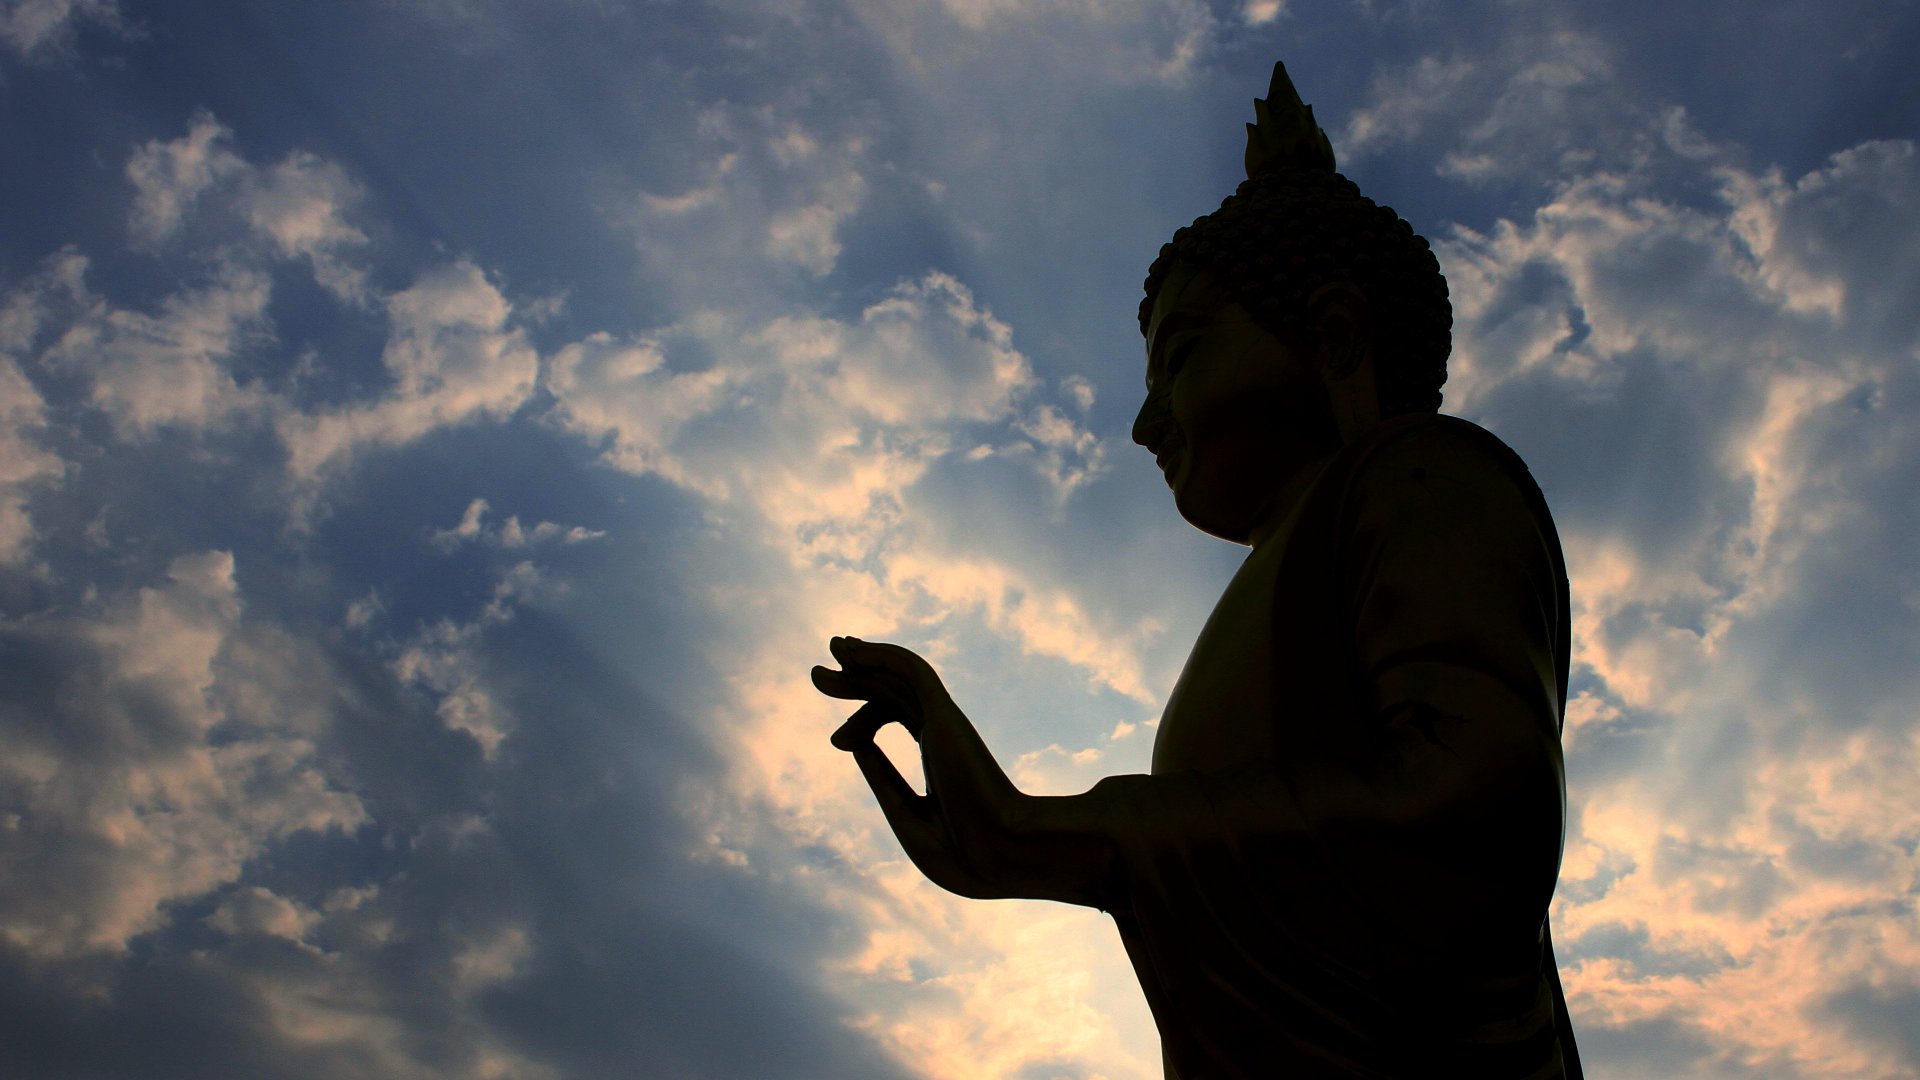 The Buddha and the sky 5